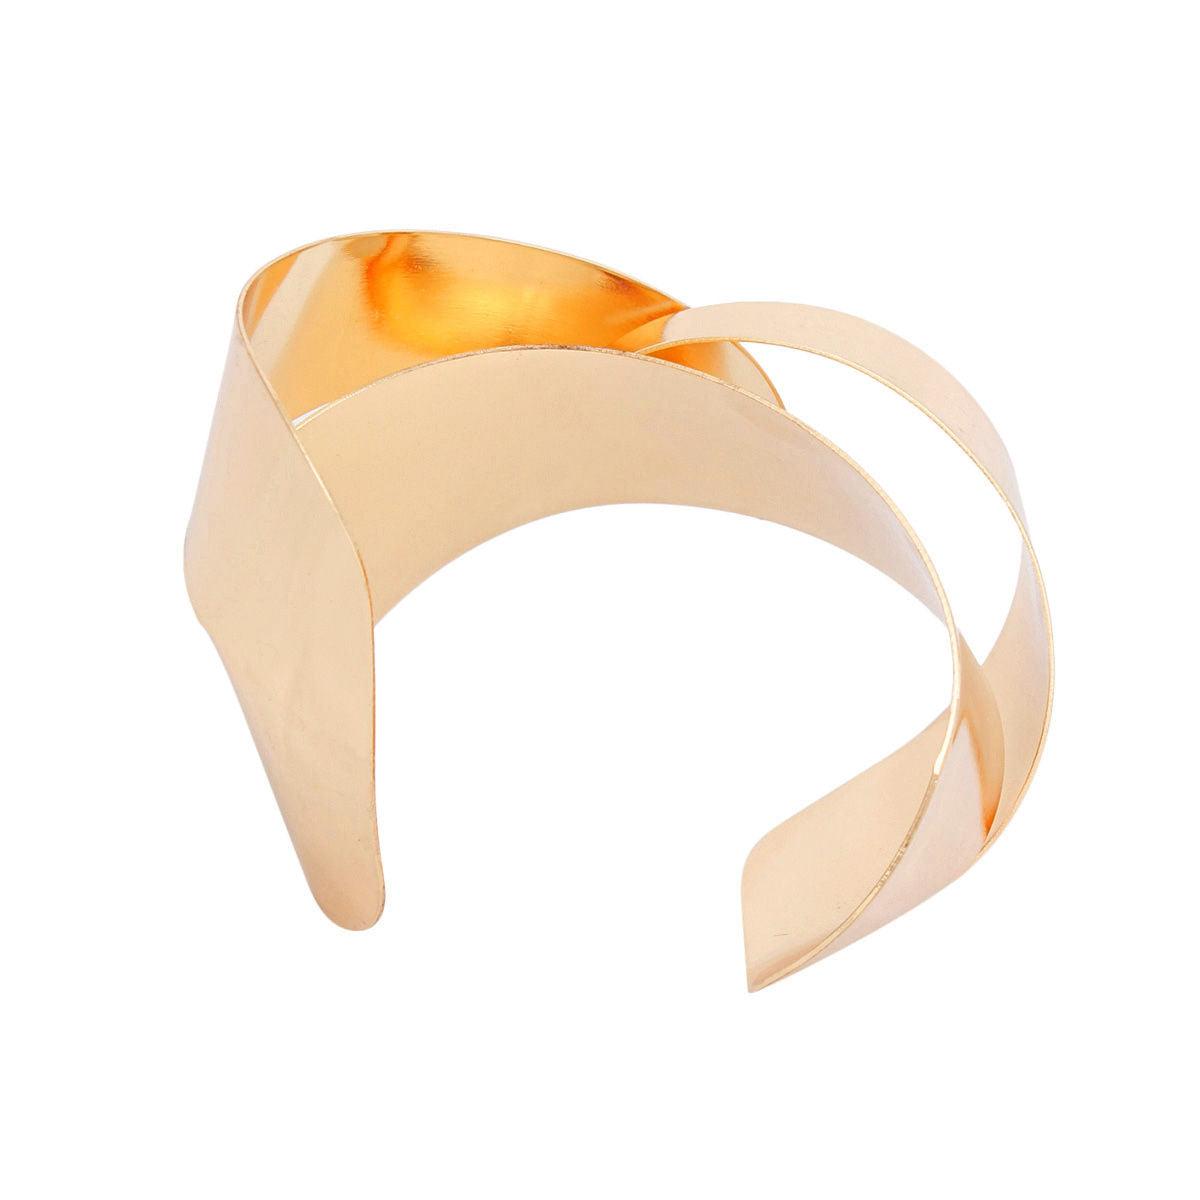 Women's Gold Cuff Bracelet: The Modern Accessory to Make a Statement